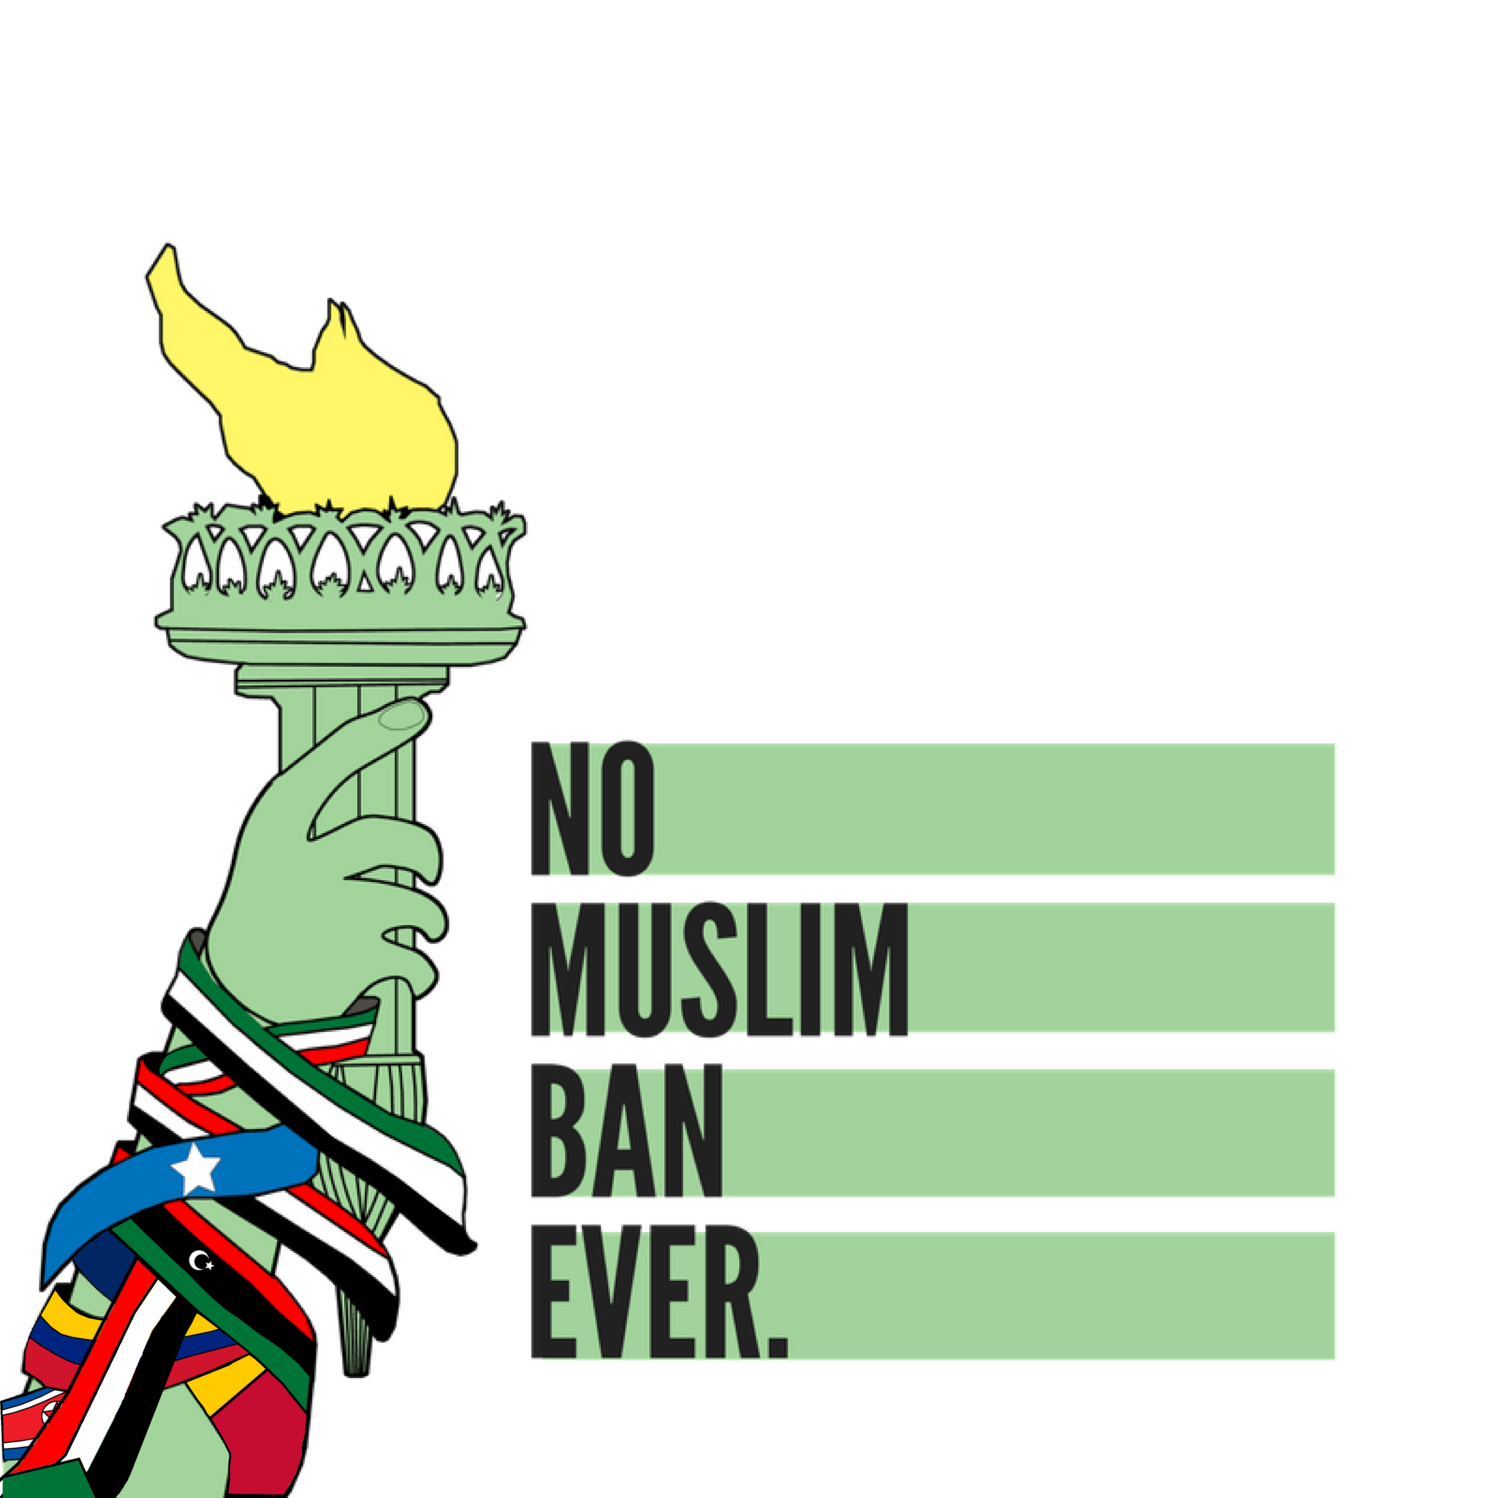 No Muslim Ban Ever logo